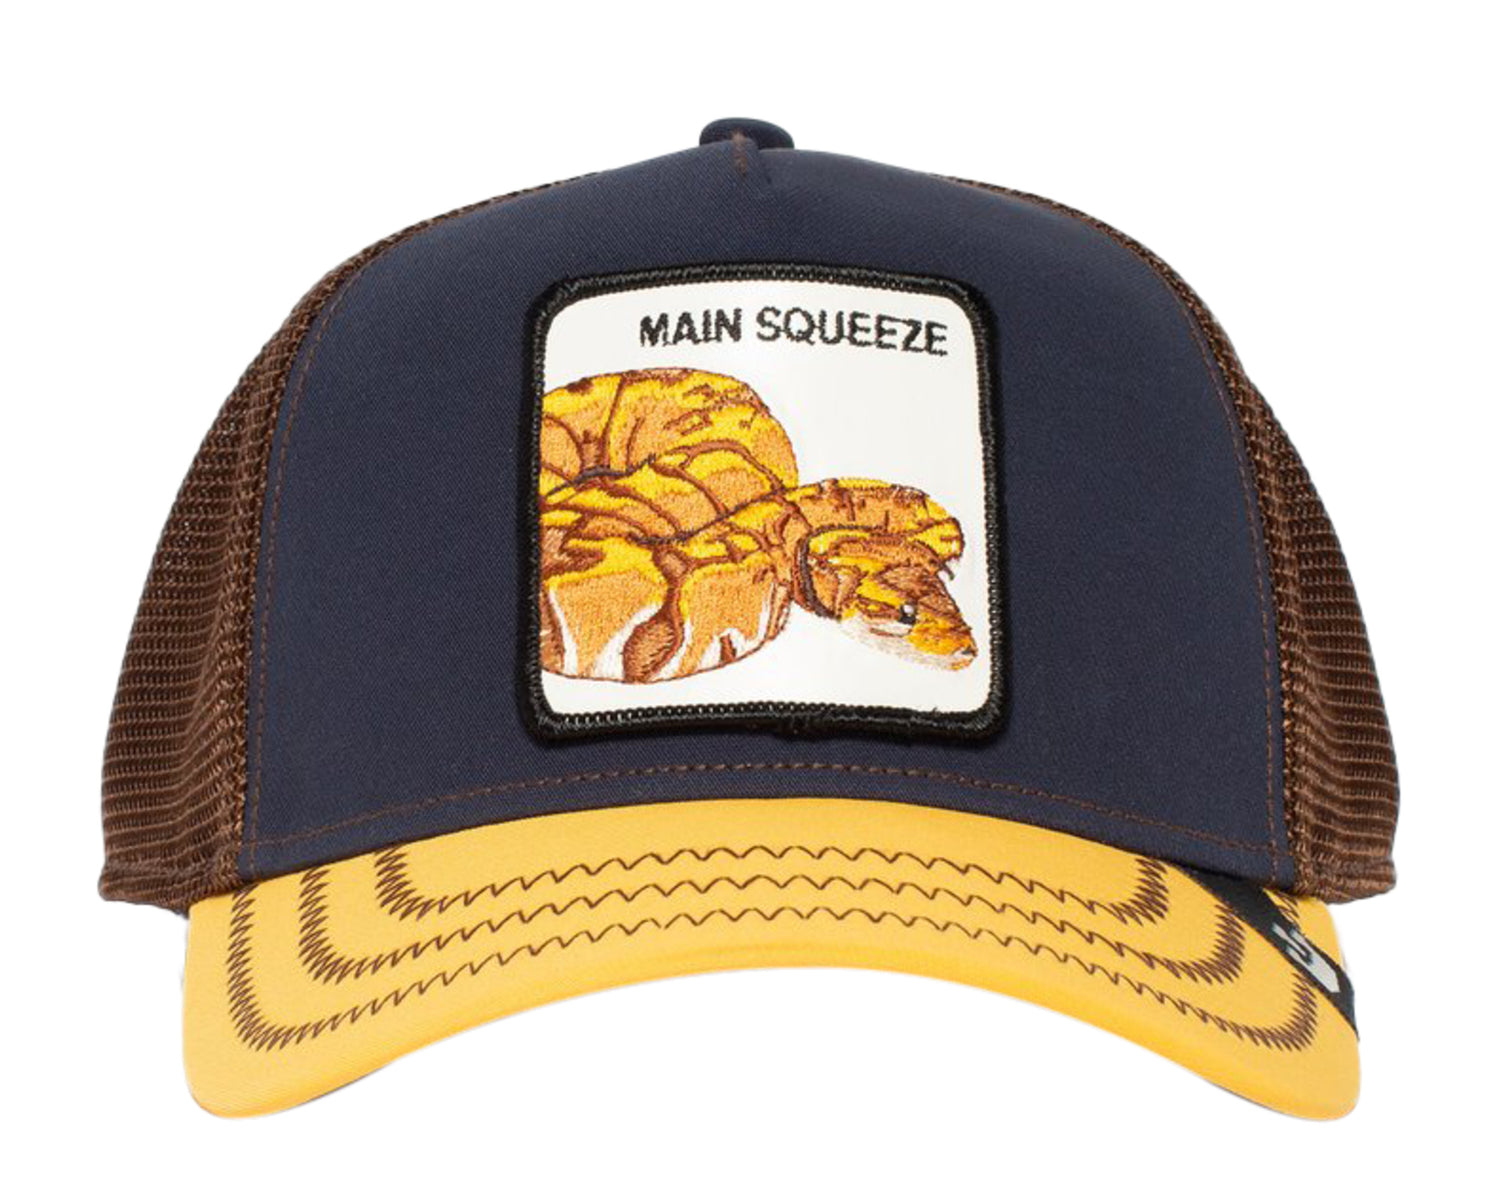 Goorin Bros - The Farm - Main Squeeze Trucker Hat